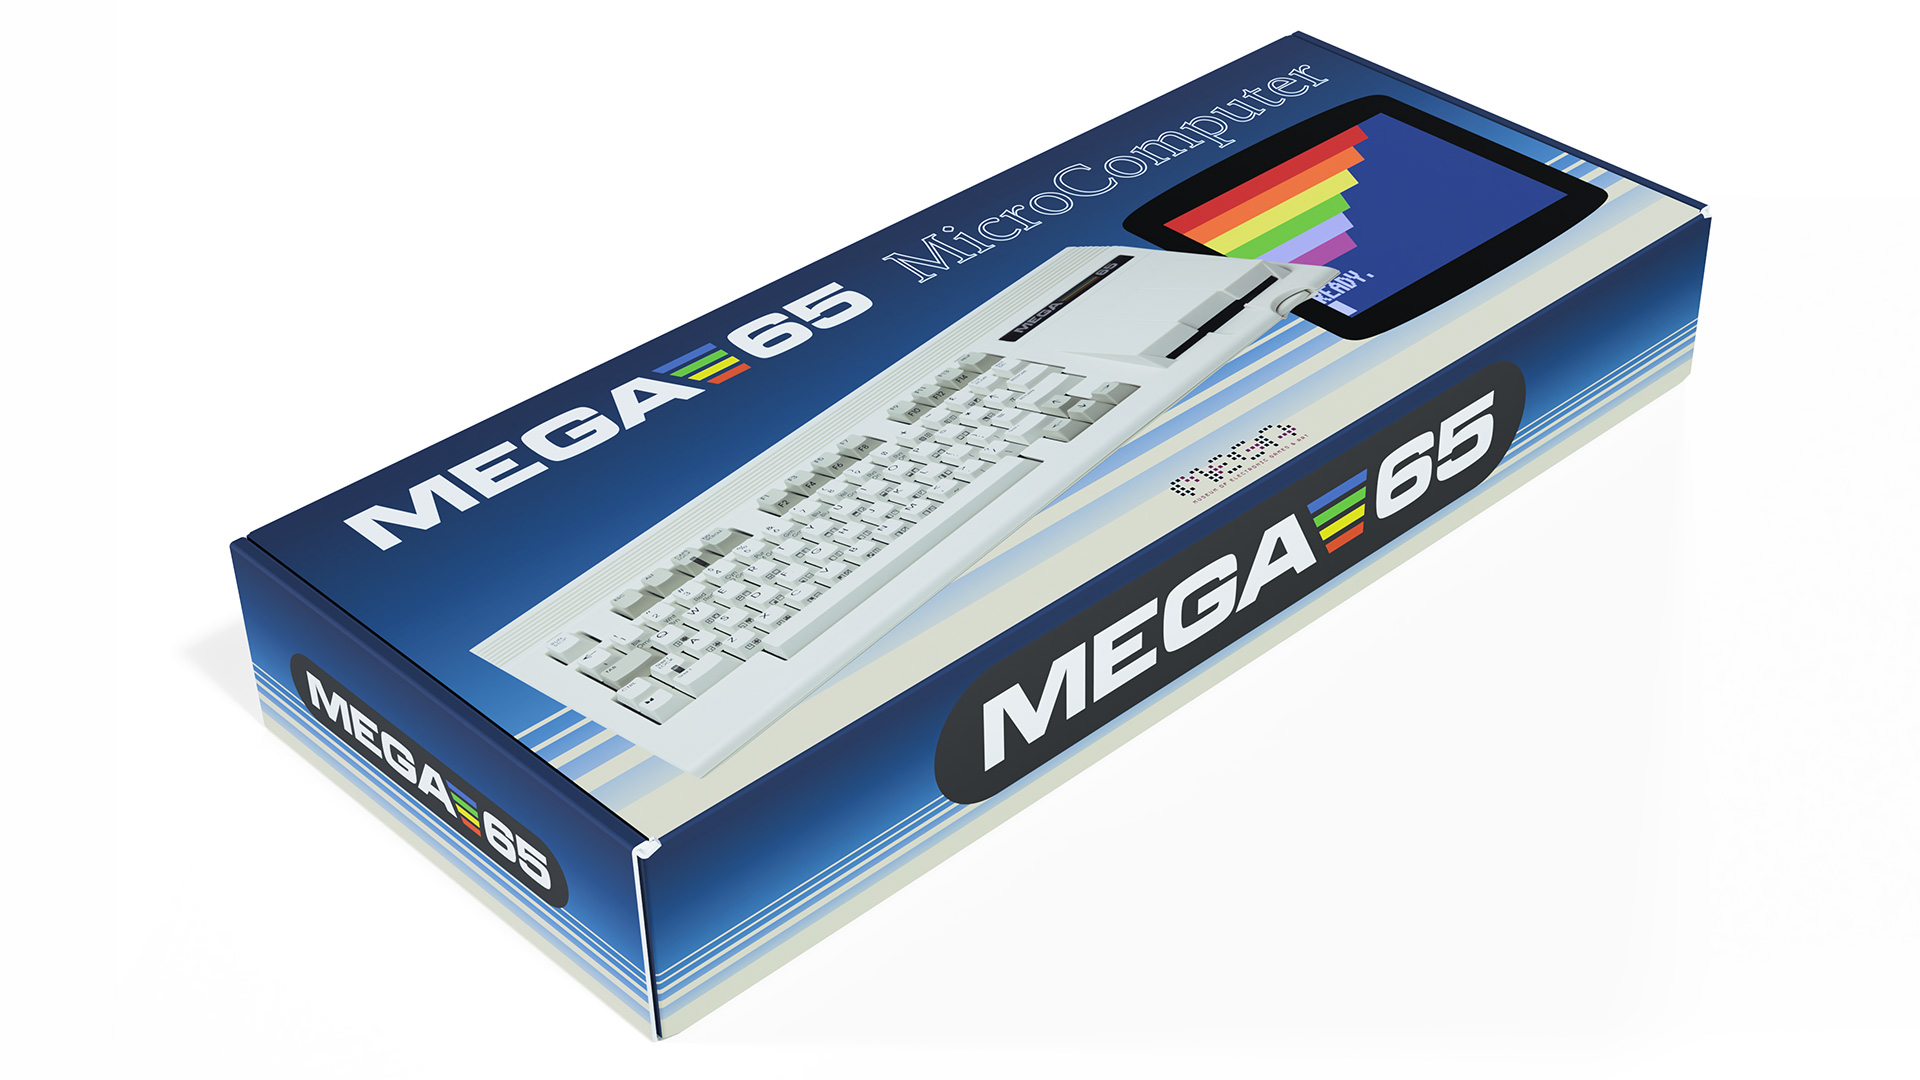 The MEGA65 retail packaging box